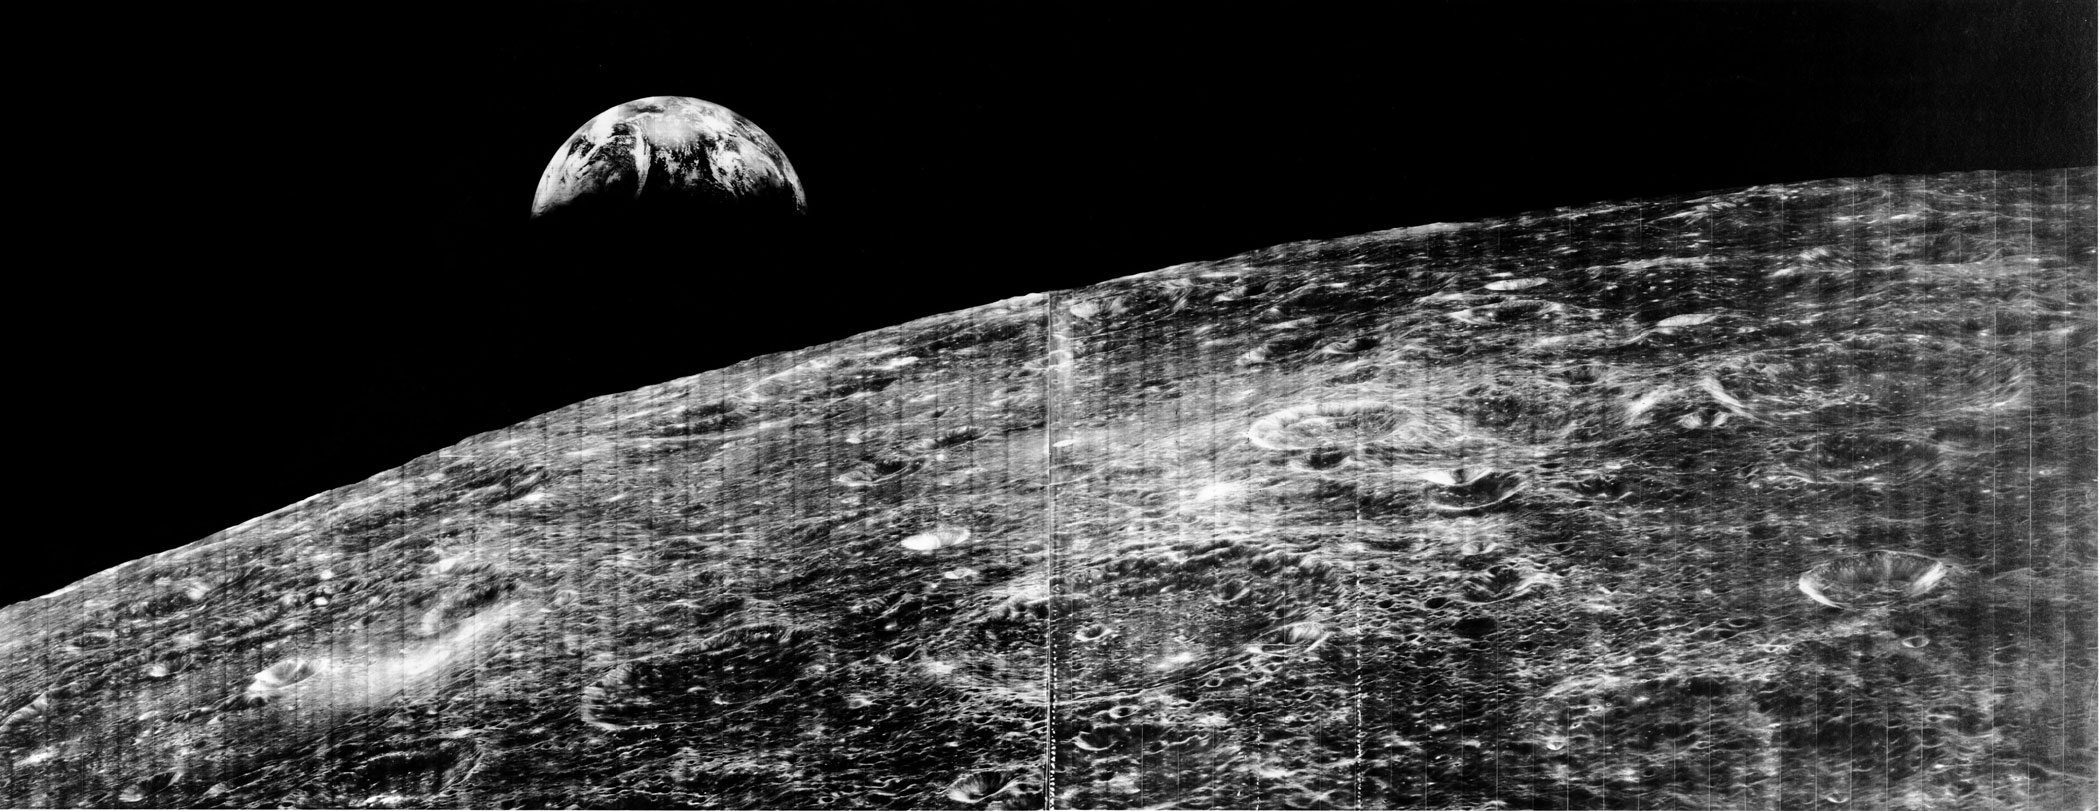 iconic-space-photos-earthrise--nasa